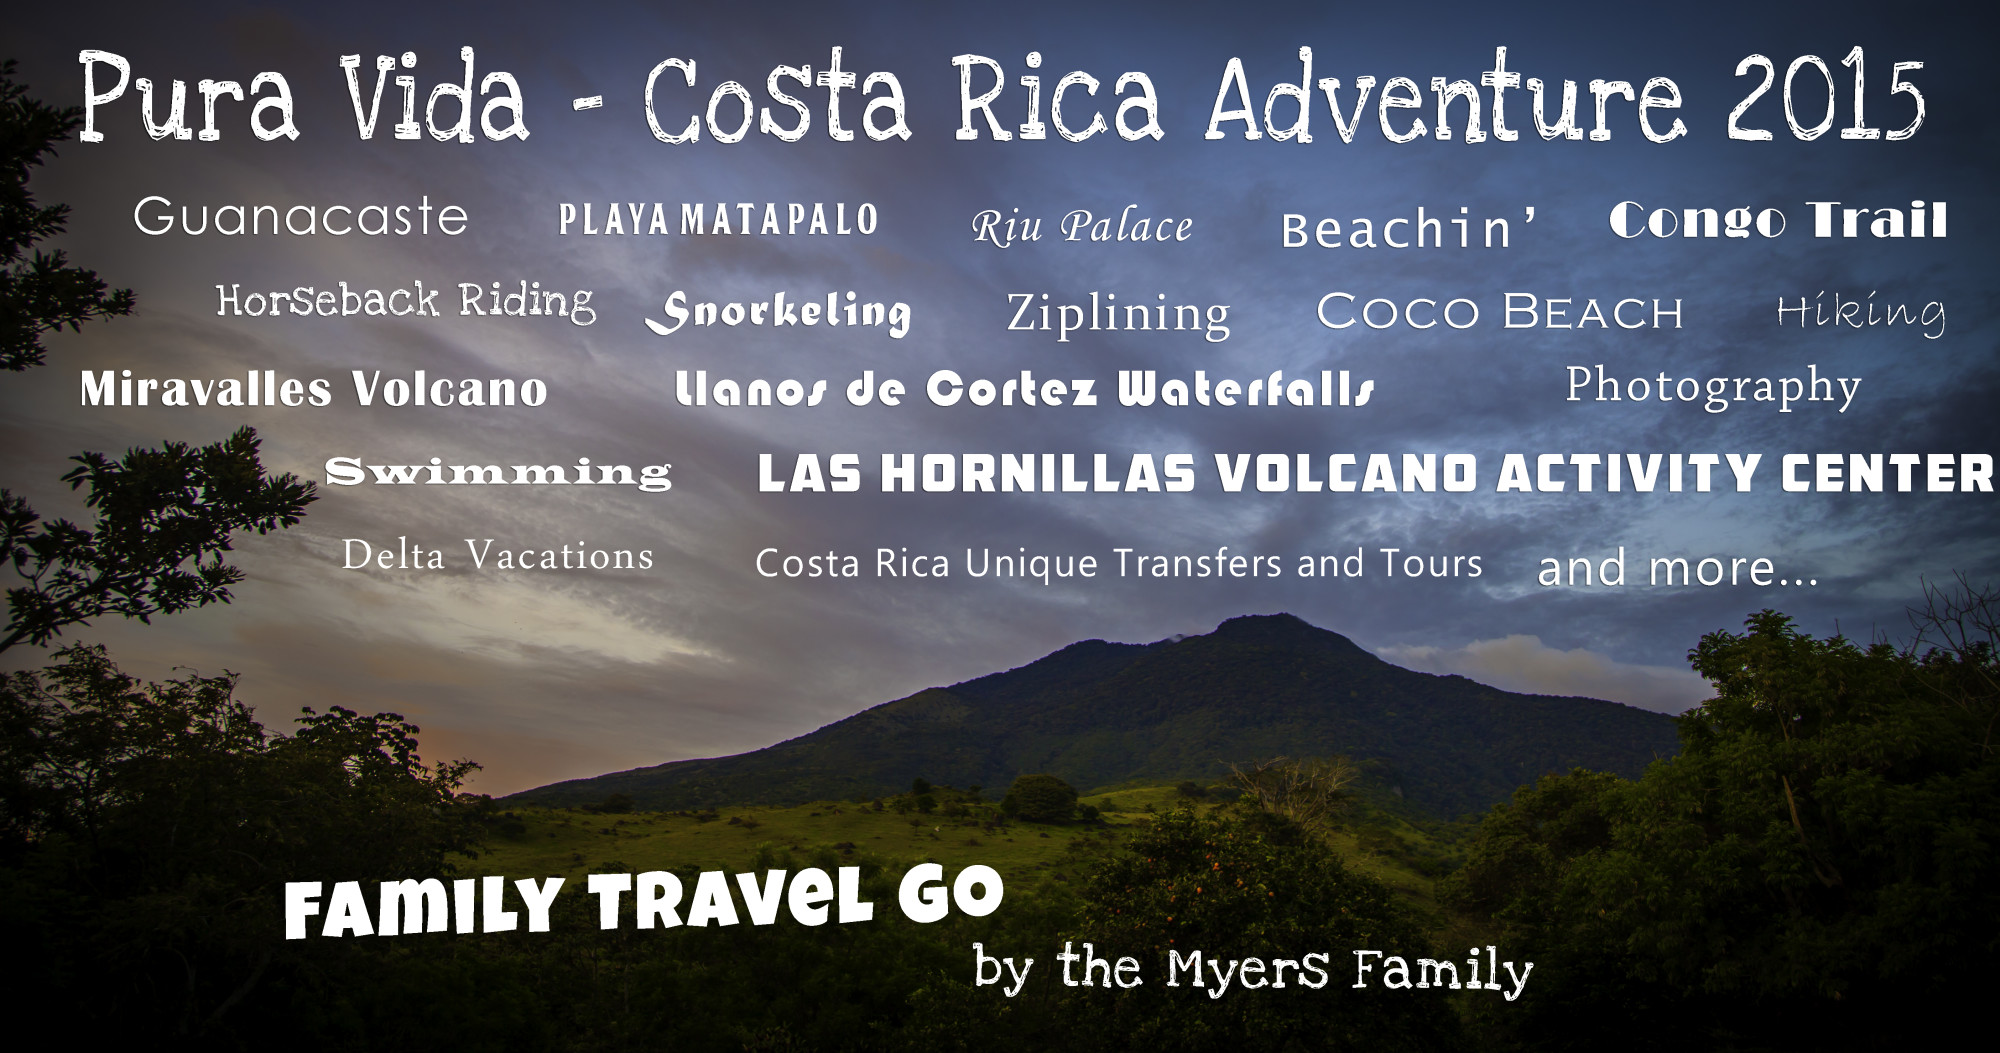 Pura Vida – Costa Rica 2015 – The Adventure